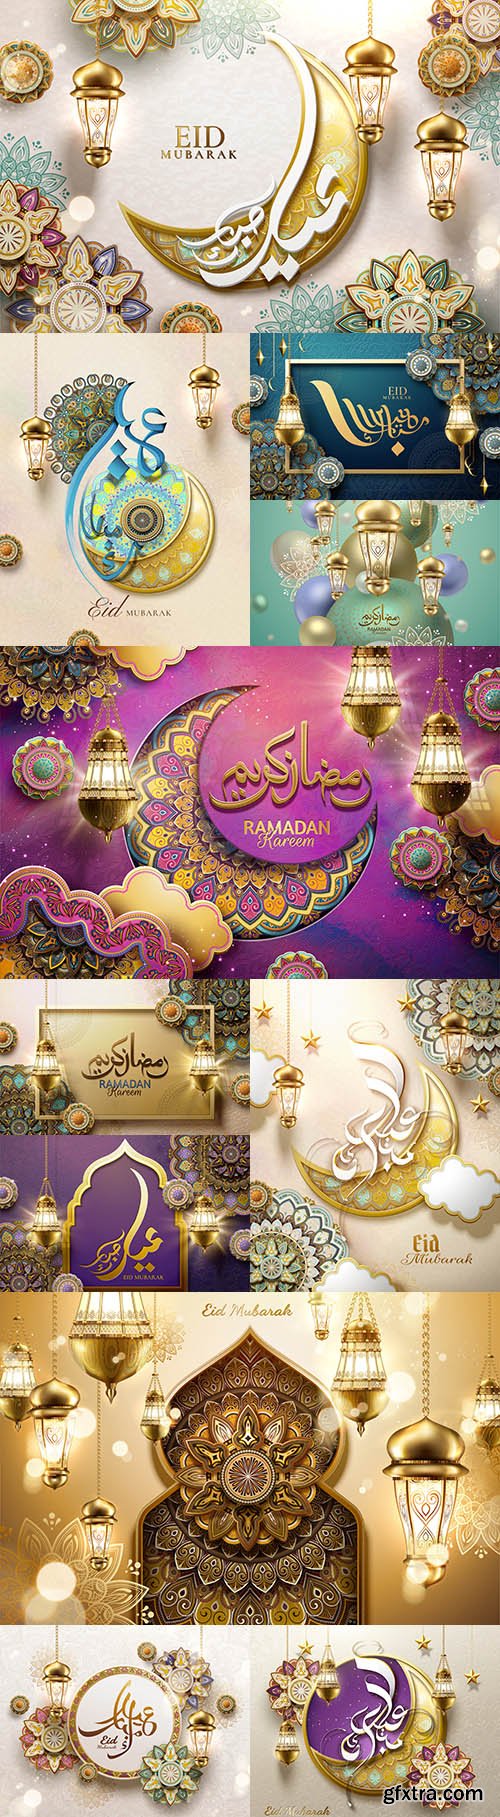 Ramadan Kareem banner with mosque and lantern background 2